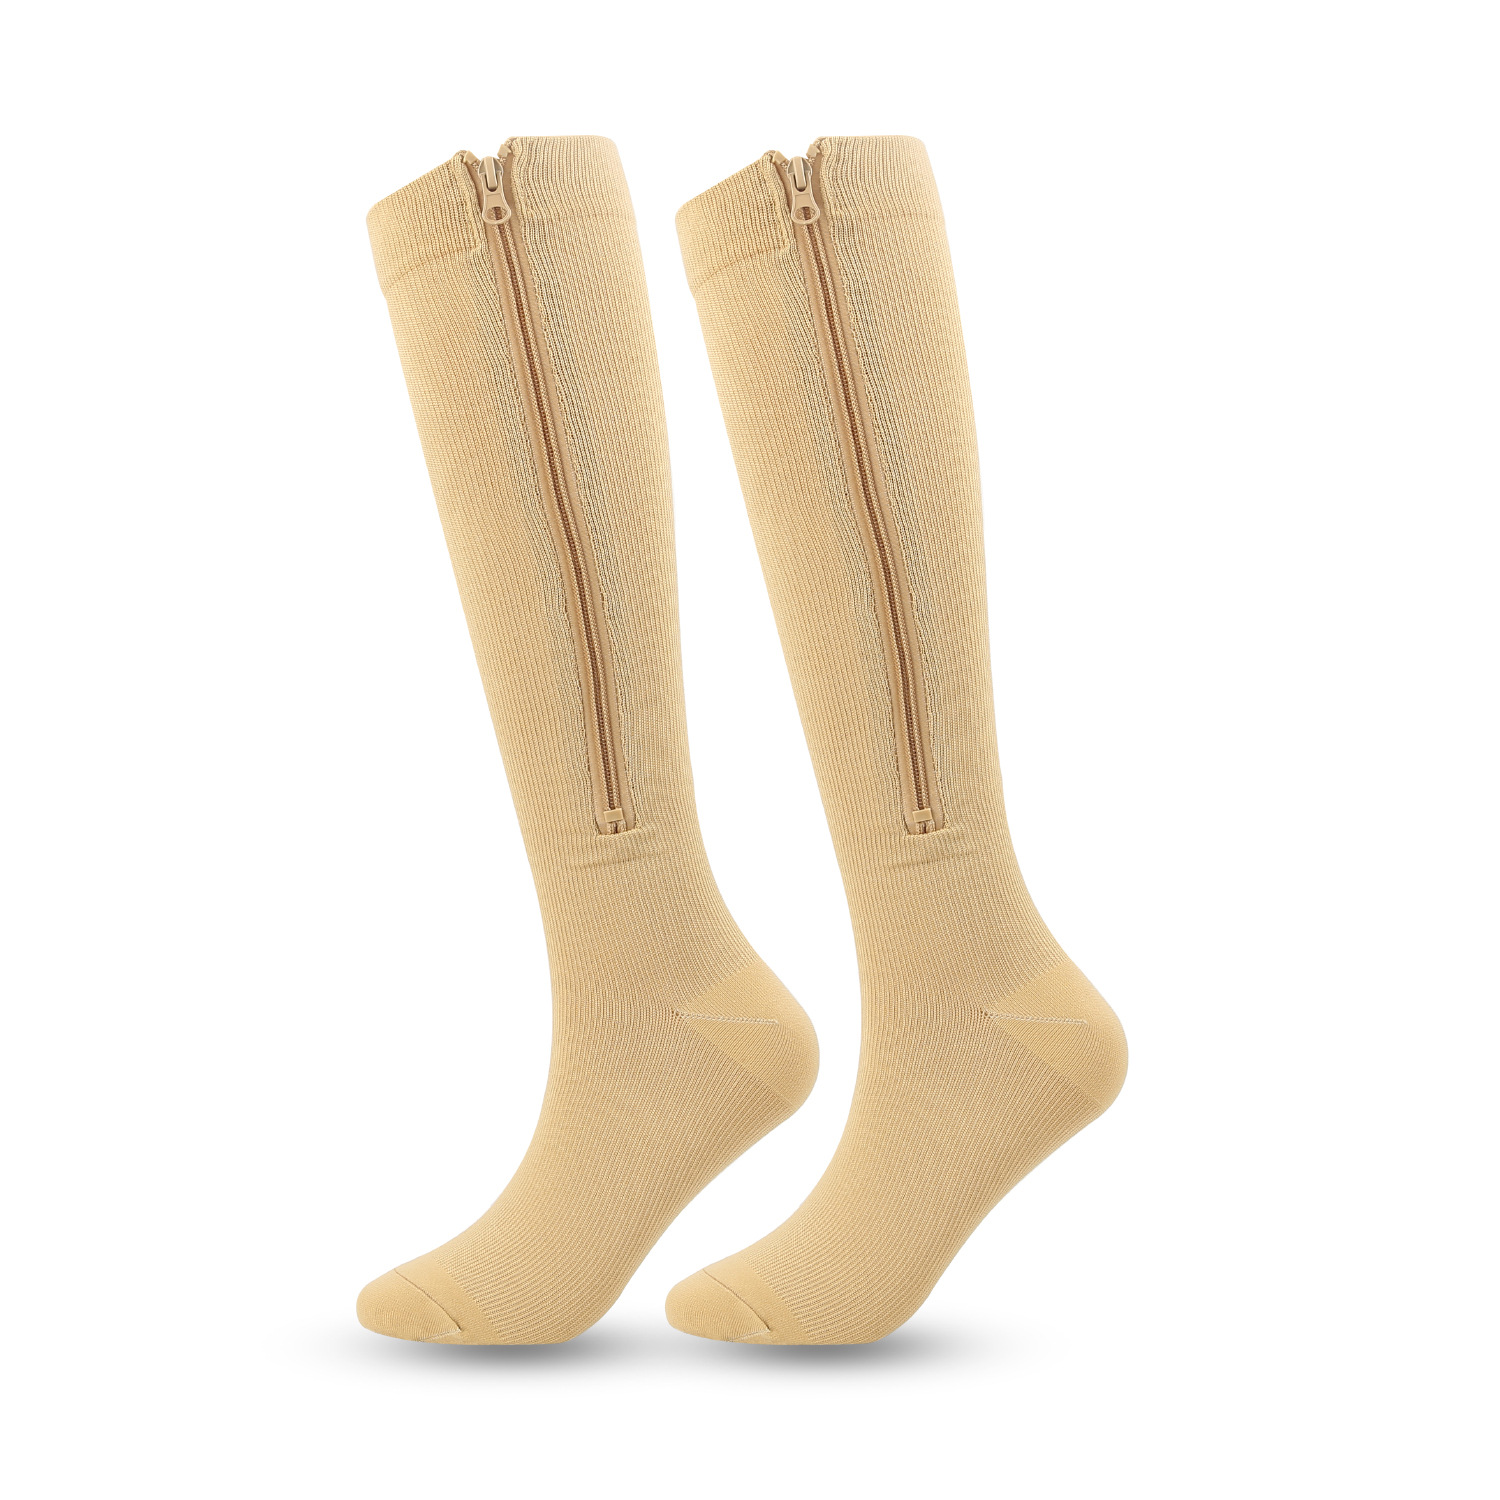 Amazon Sports Compression Stockings New Bag Toe Compression Compression Socks Outdoor Long Calf Stretch Socks